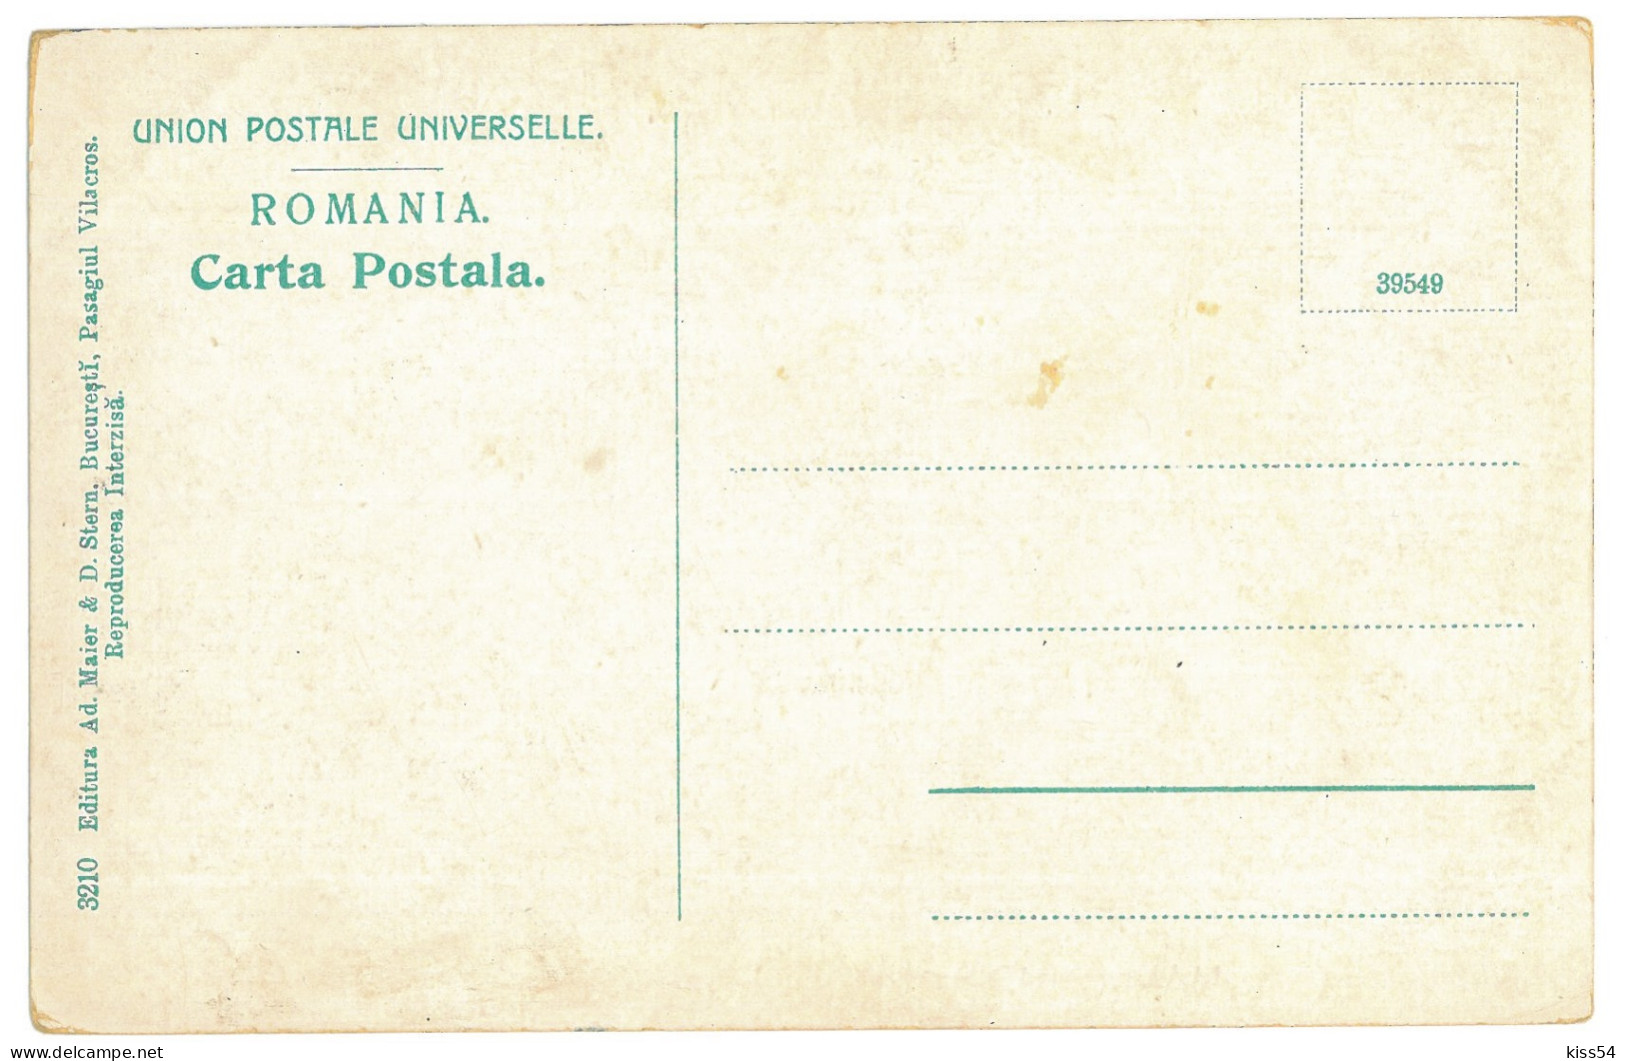 RO 09 - 25106 MORENI, Dambovita, Oil Wells, FIRE, Romania - Old Postcard - Unused - Romania